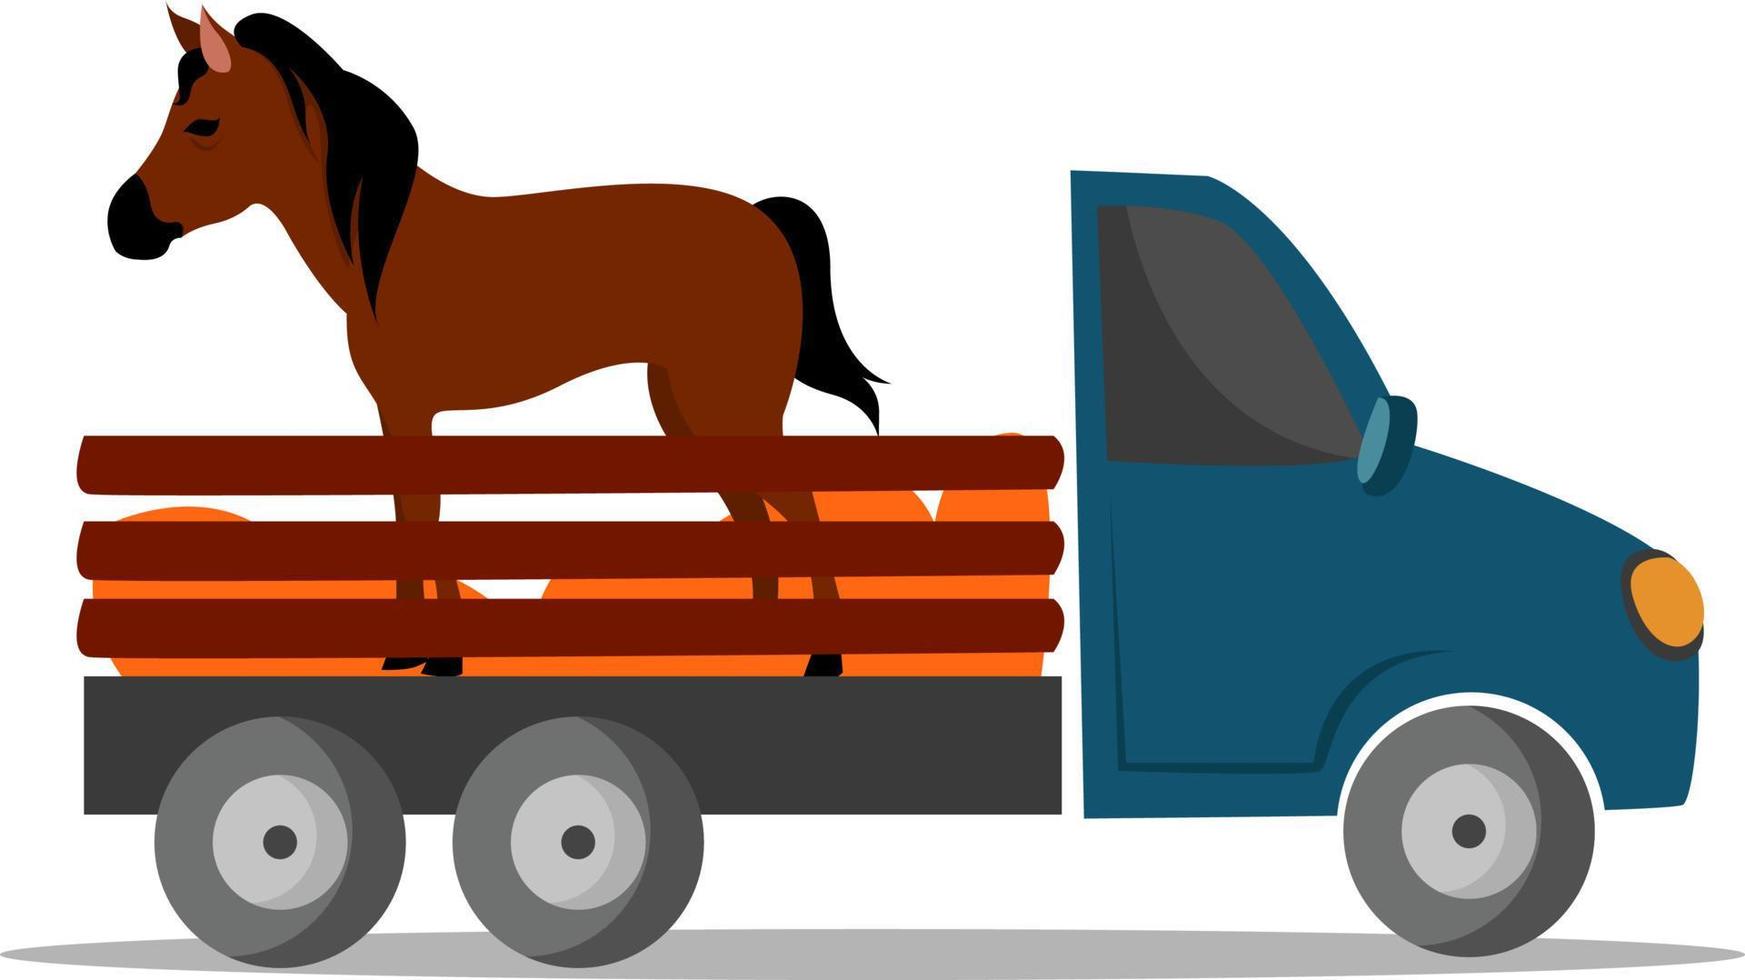 Horse on the truck, illustration, vector on white background